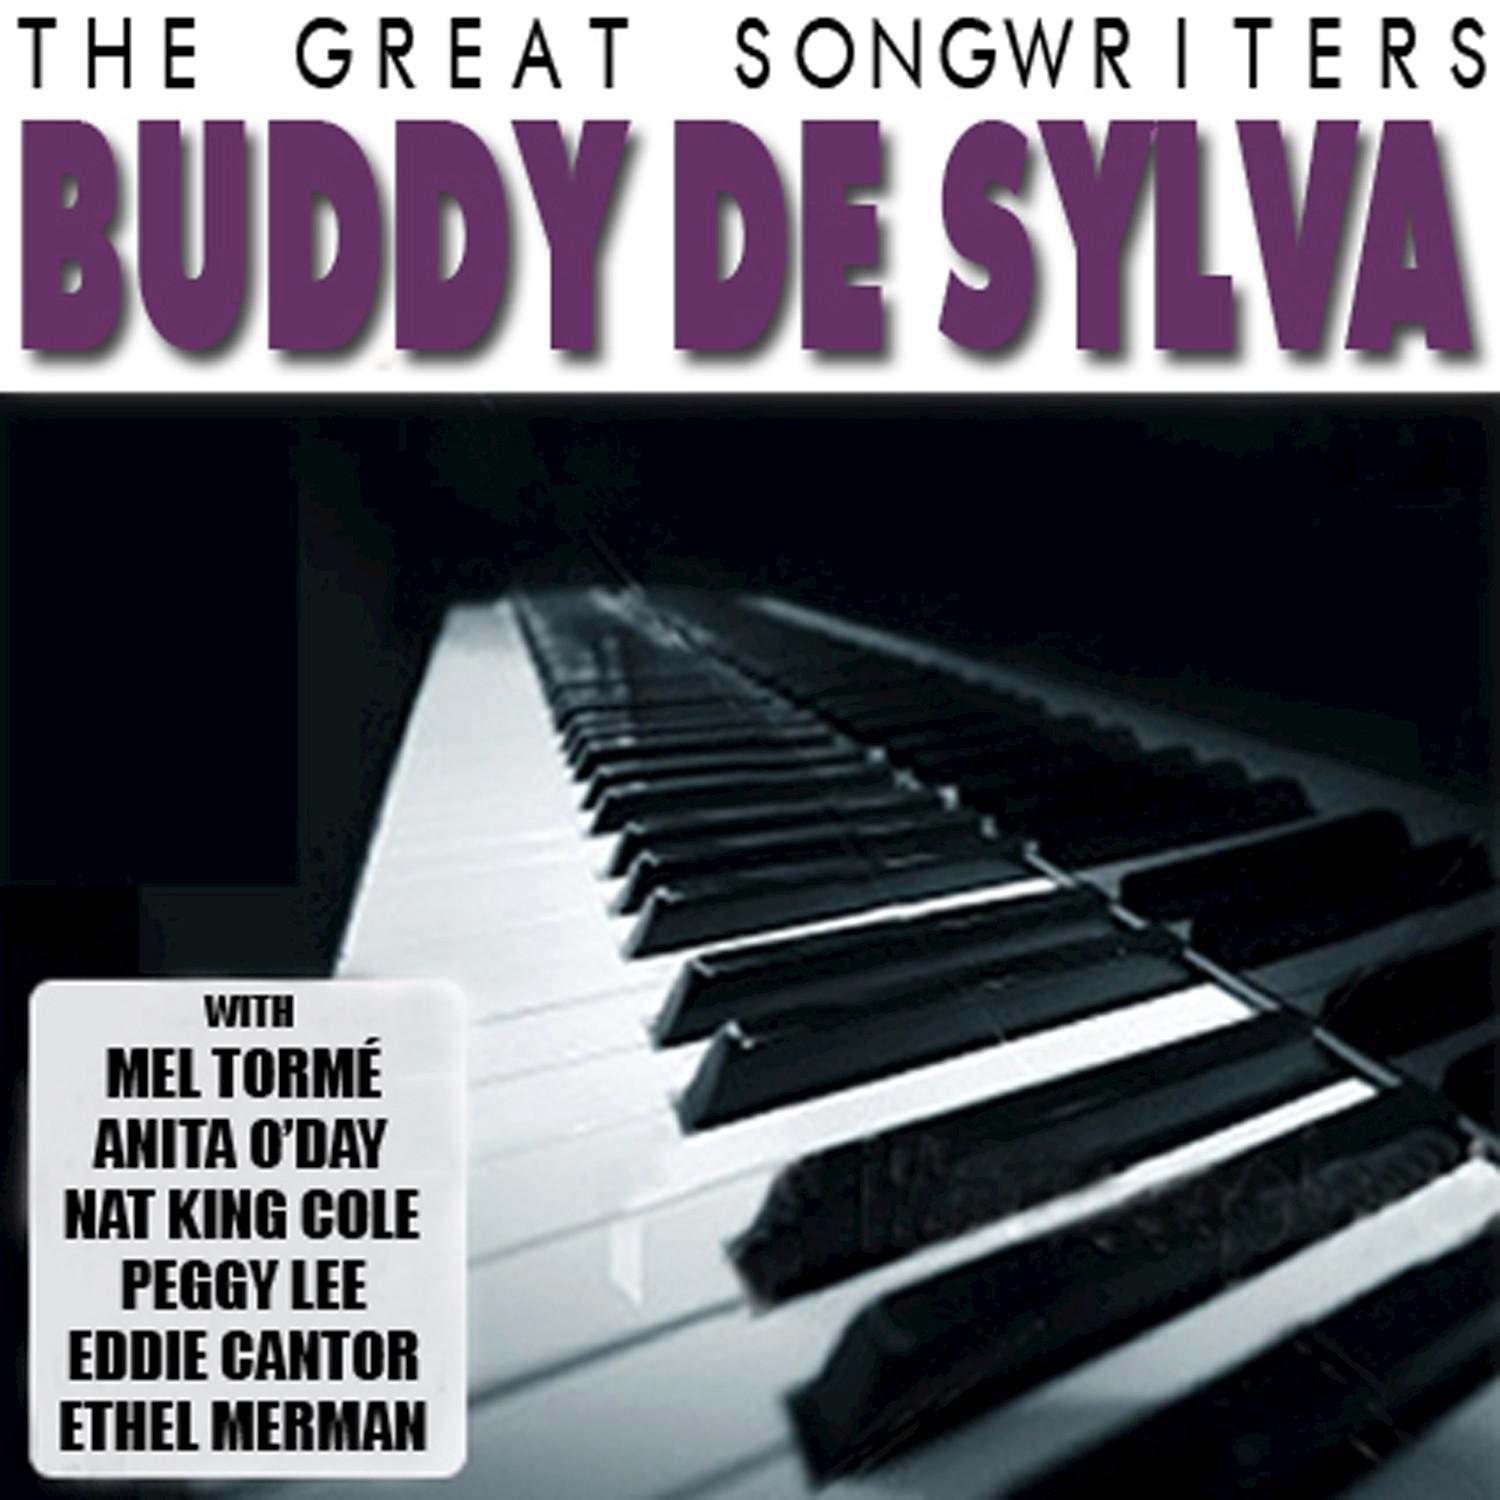 The Great Songwriters - Buddy DeSylva